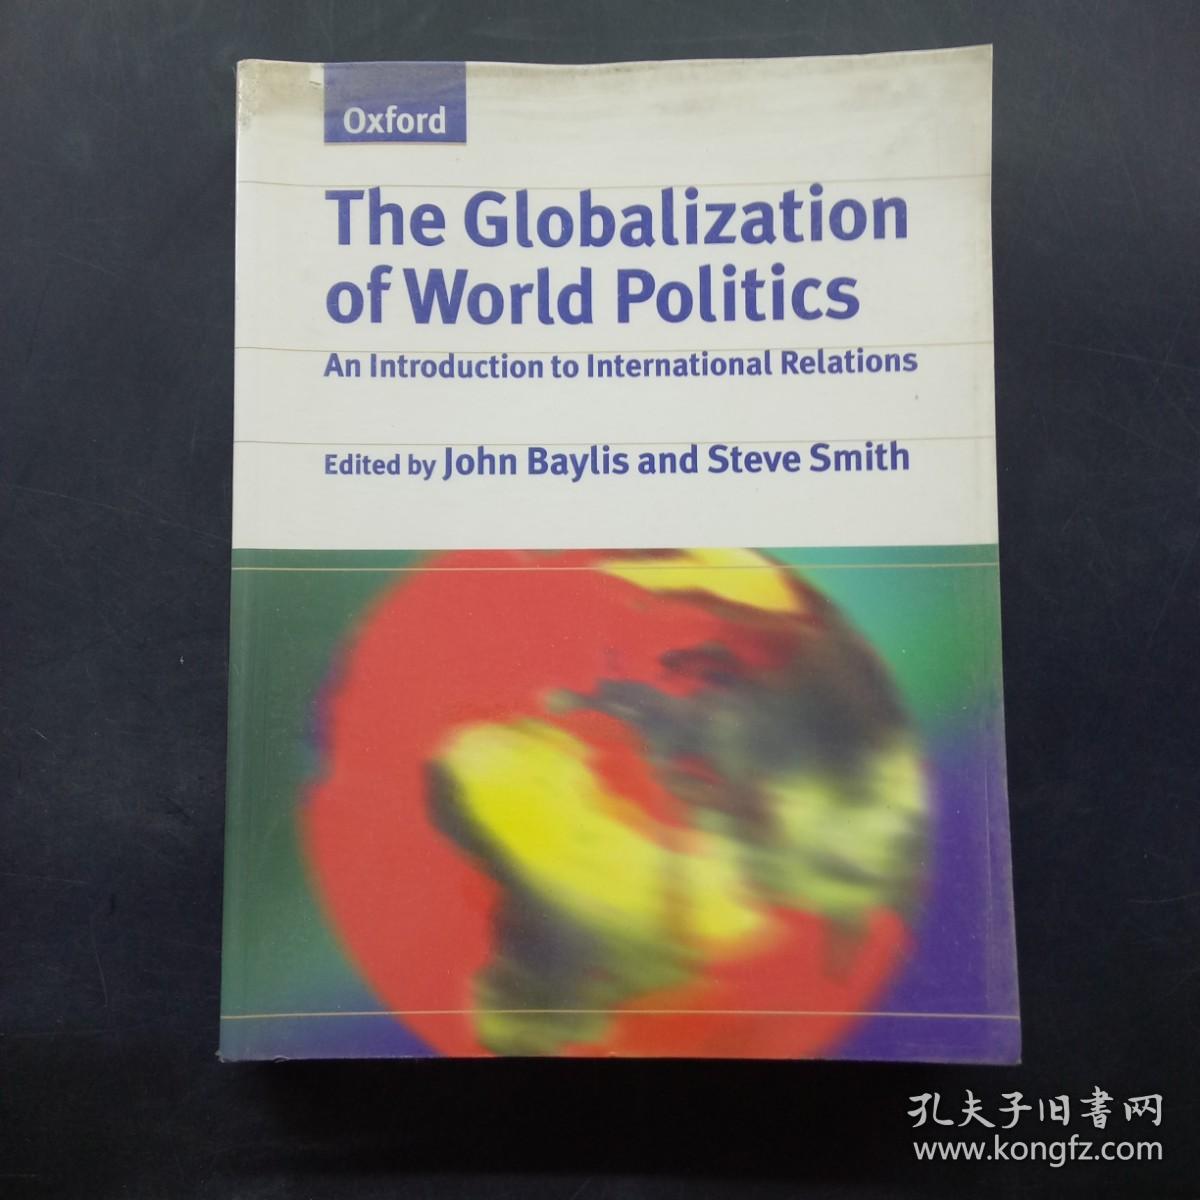 the globalization of world politics（世界政治全球化）